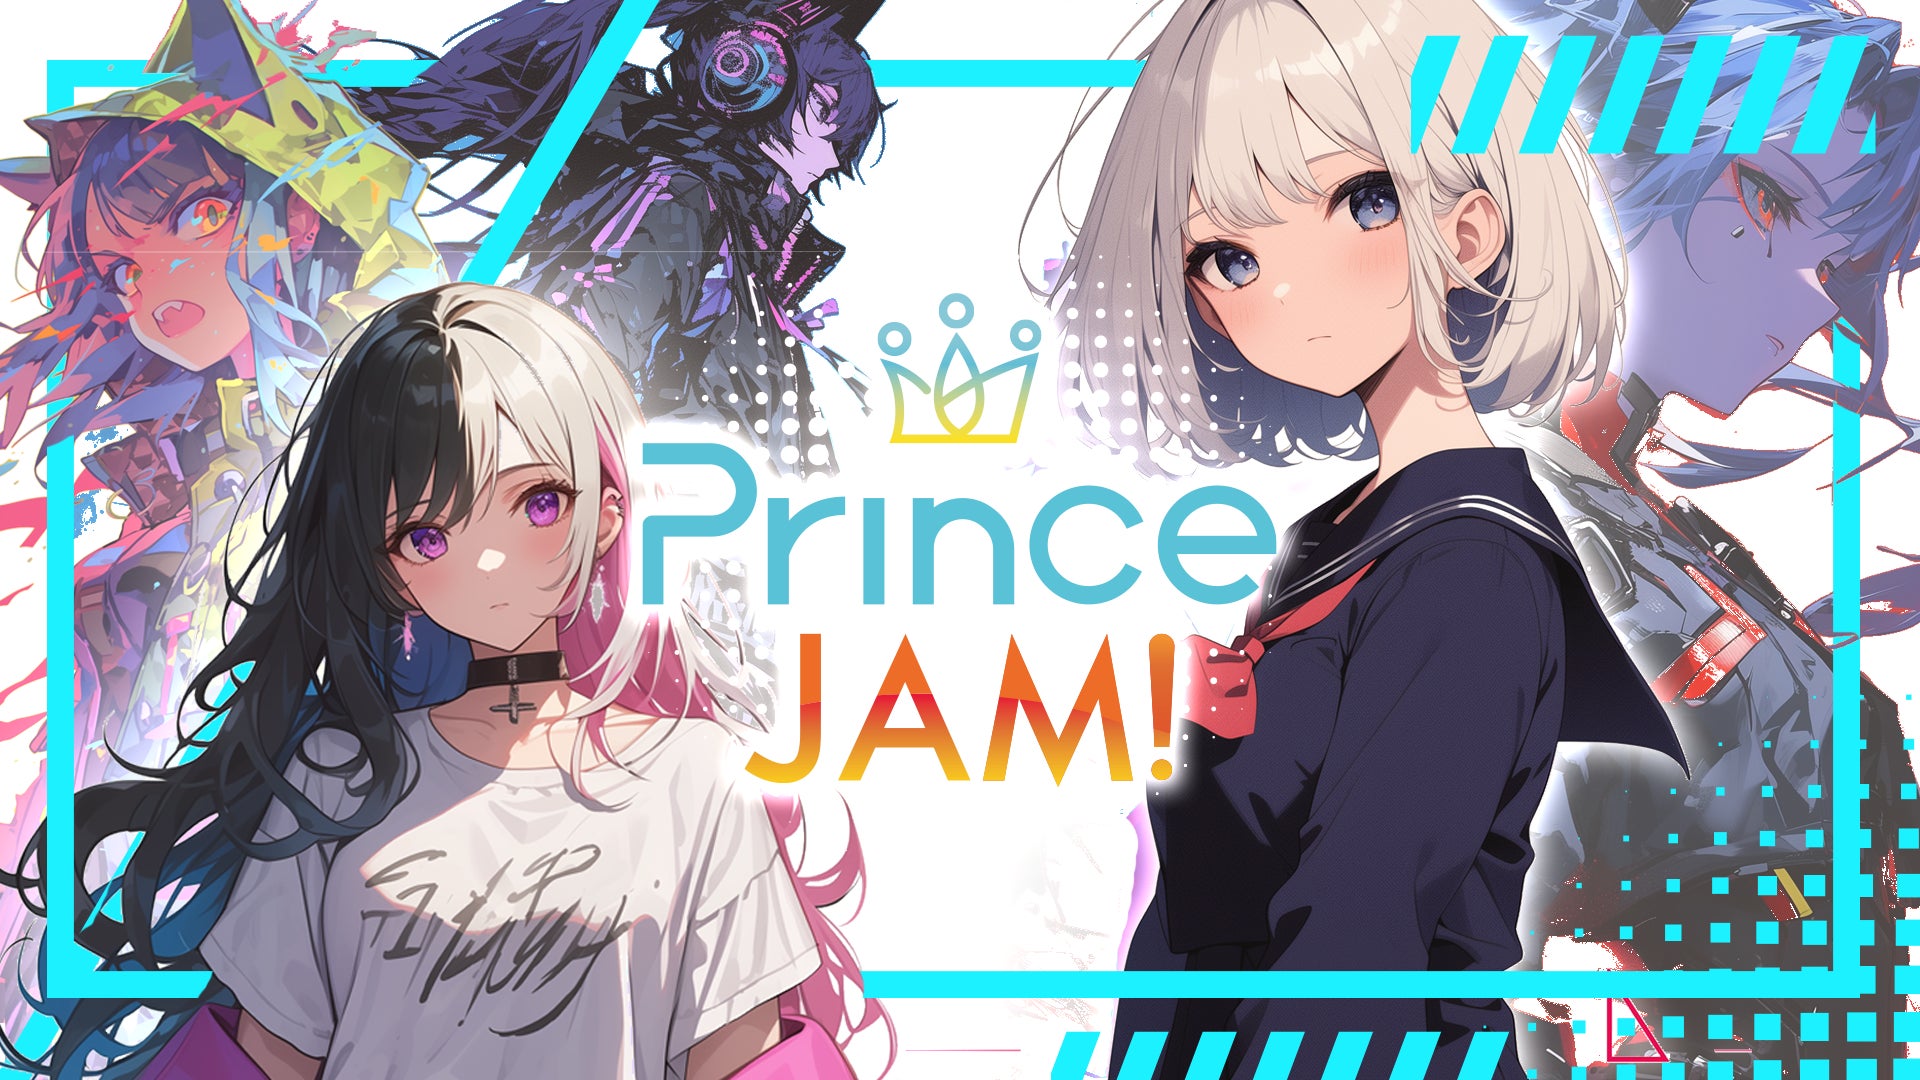 「AI×Web3アニメ」のピッチコンテスト『Prince JAM! 』の審査員発表。マルチクリエイター広井王子氏、ジャーナリスト数土直志氏など。